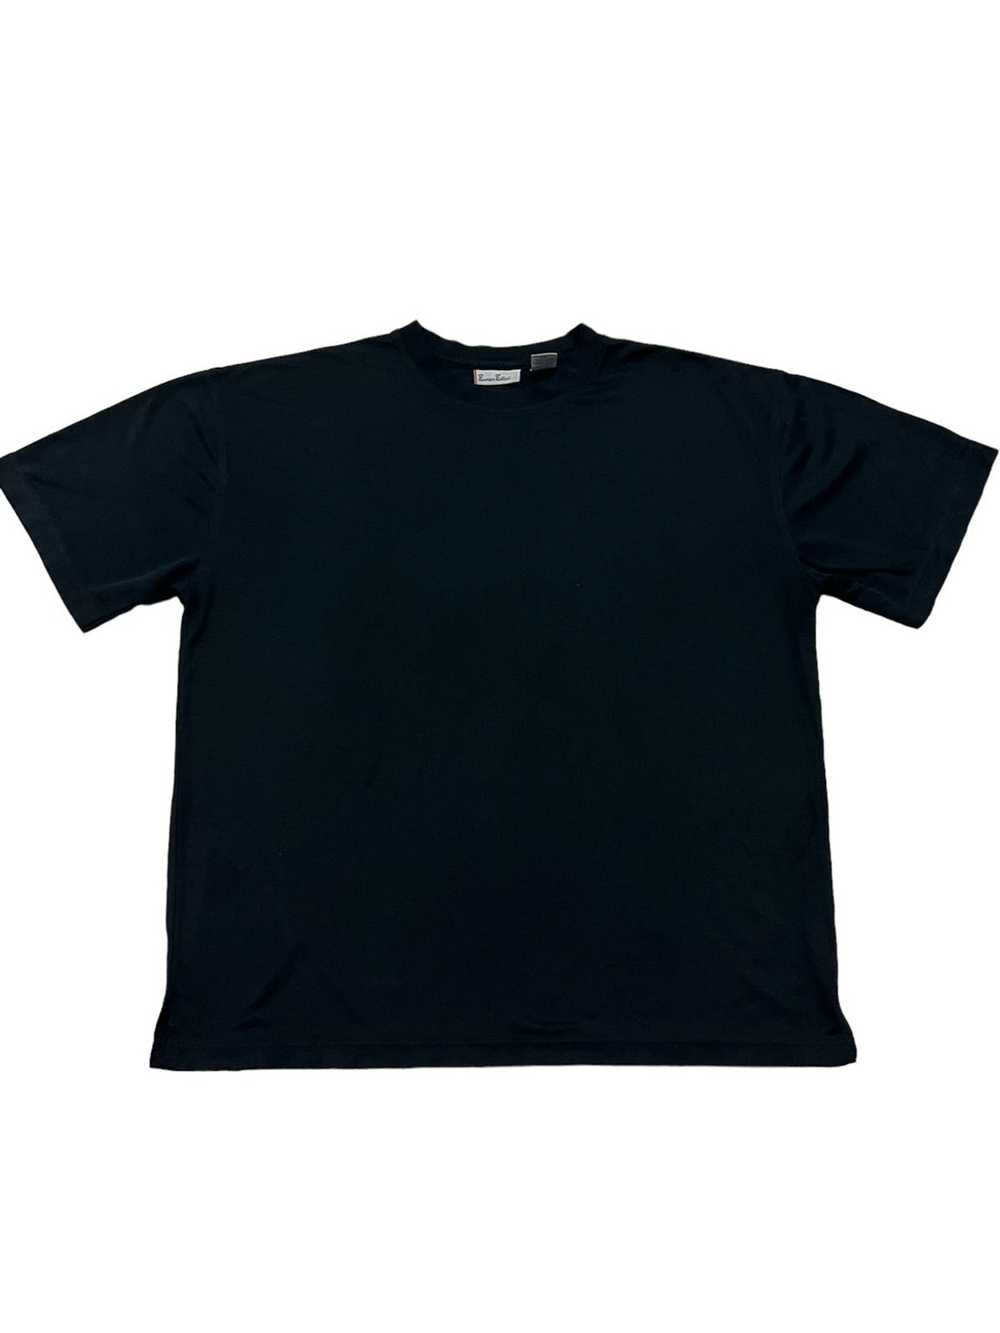 Burma Bibas Burma Bibas T-shirt Size M -Black- - image 1